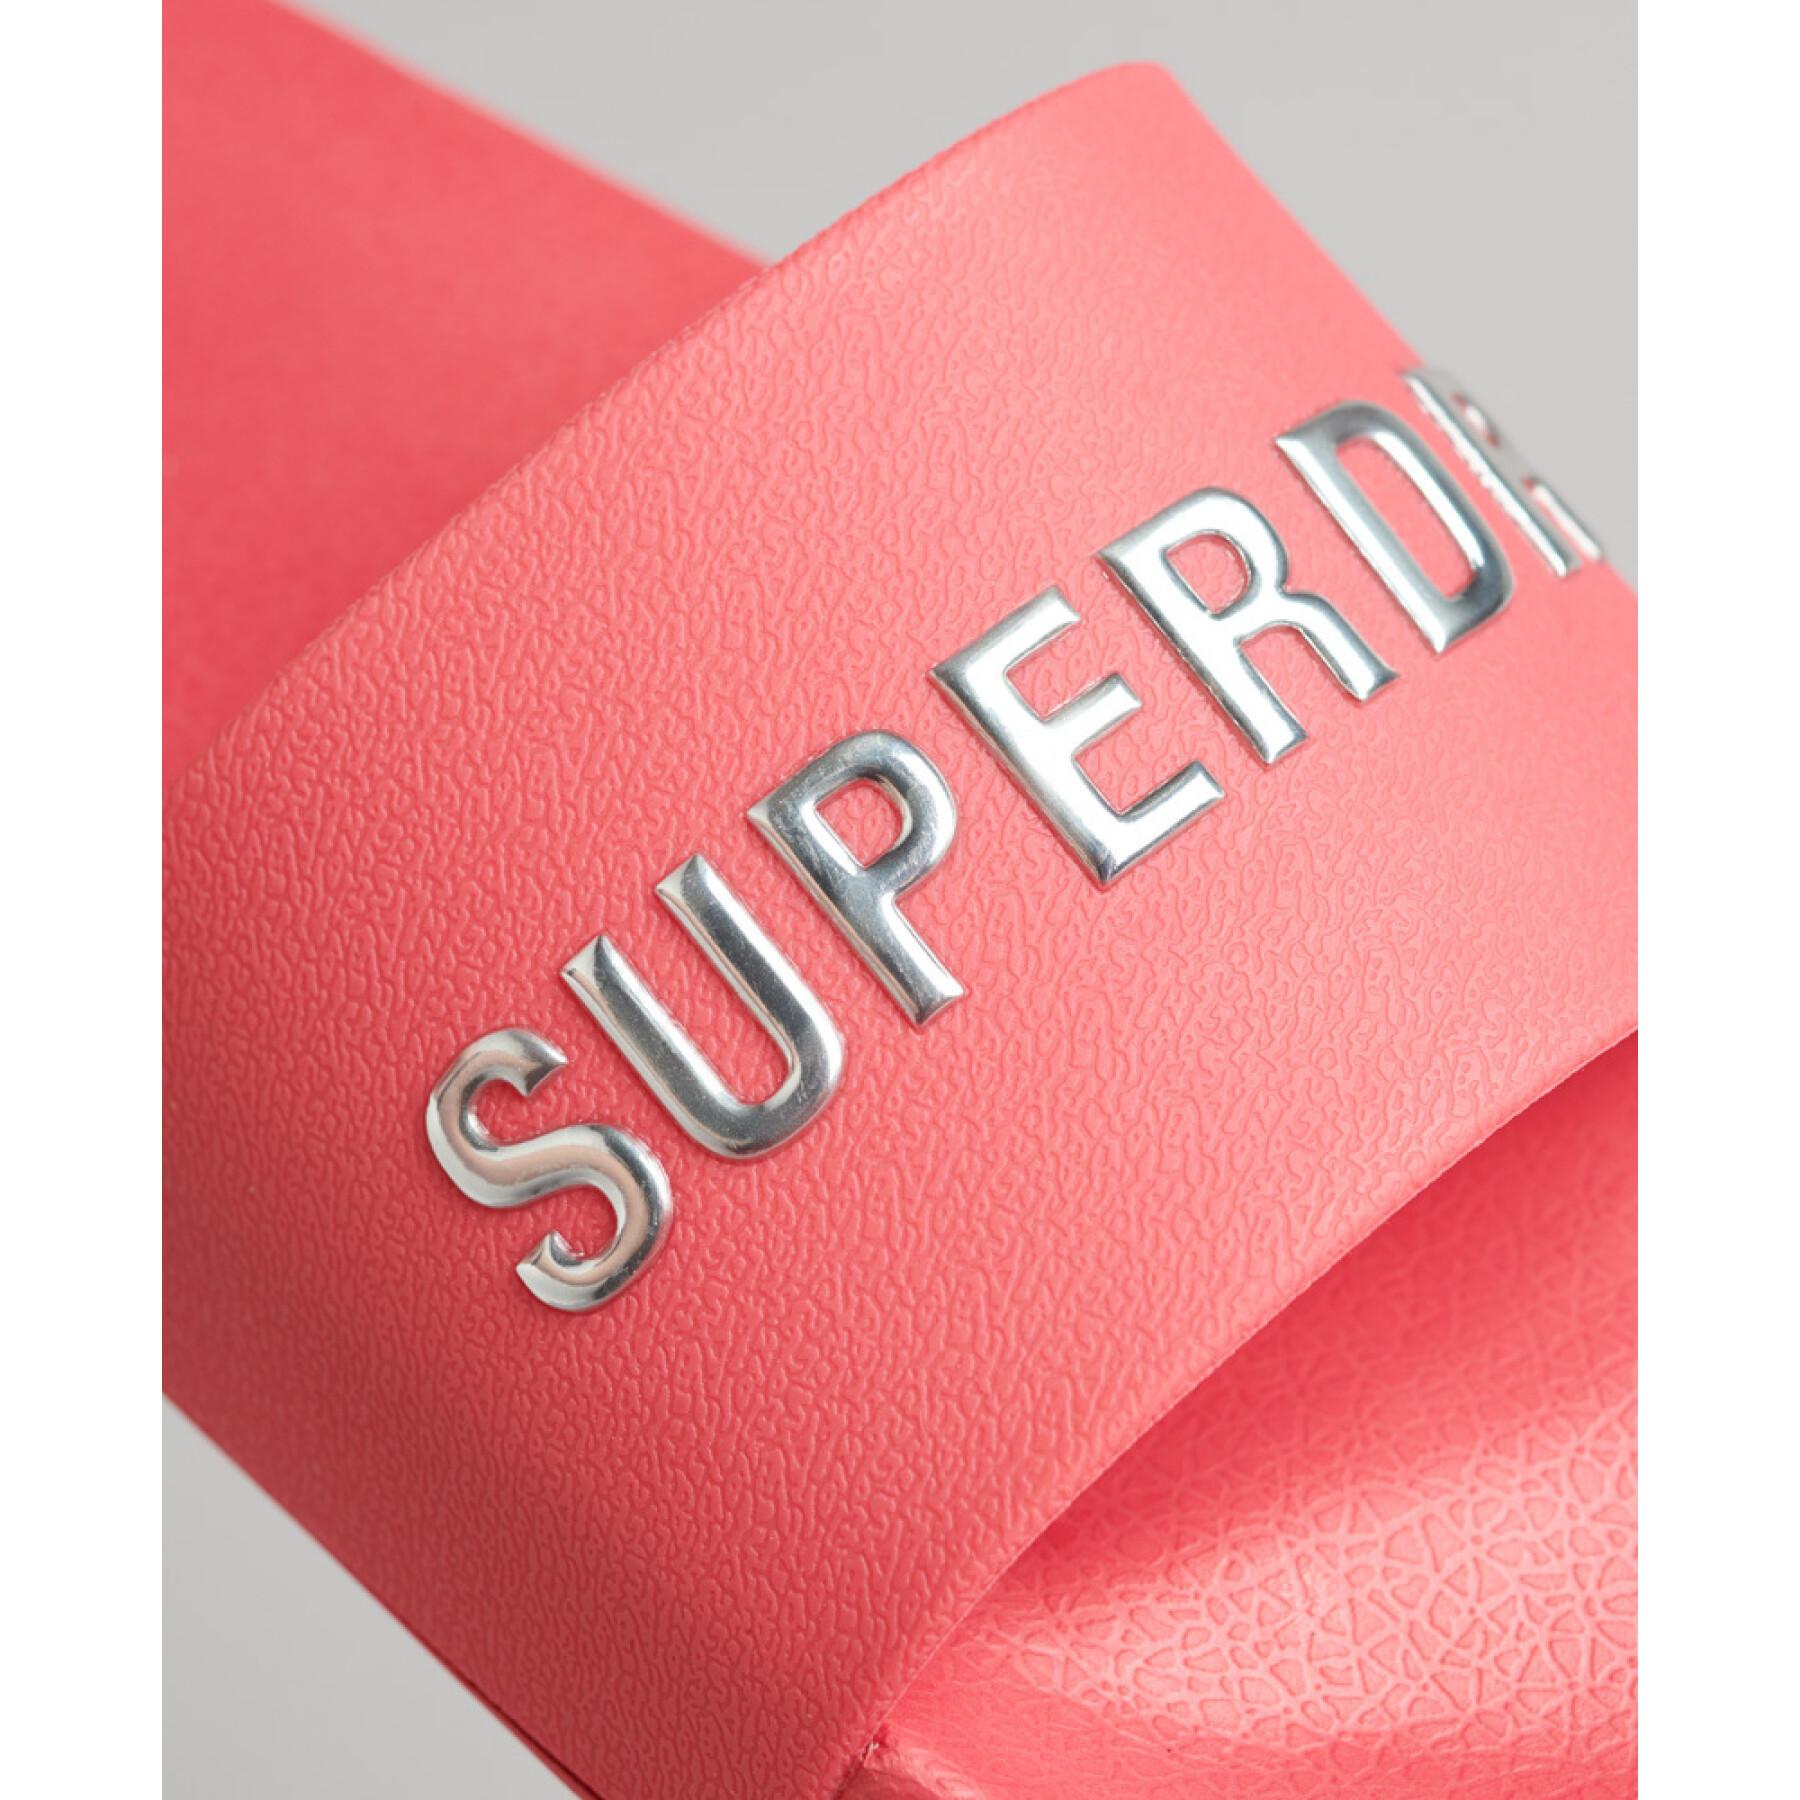 Women's logo pool slippers Superdry Code